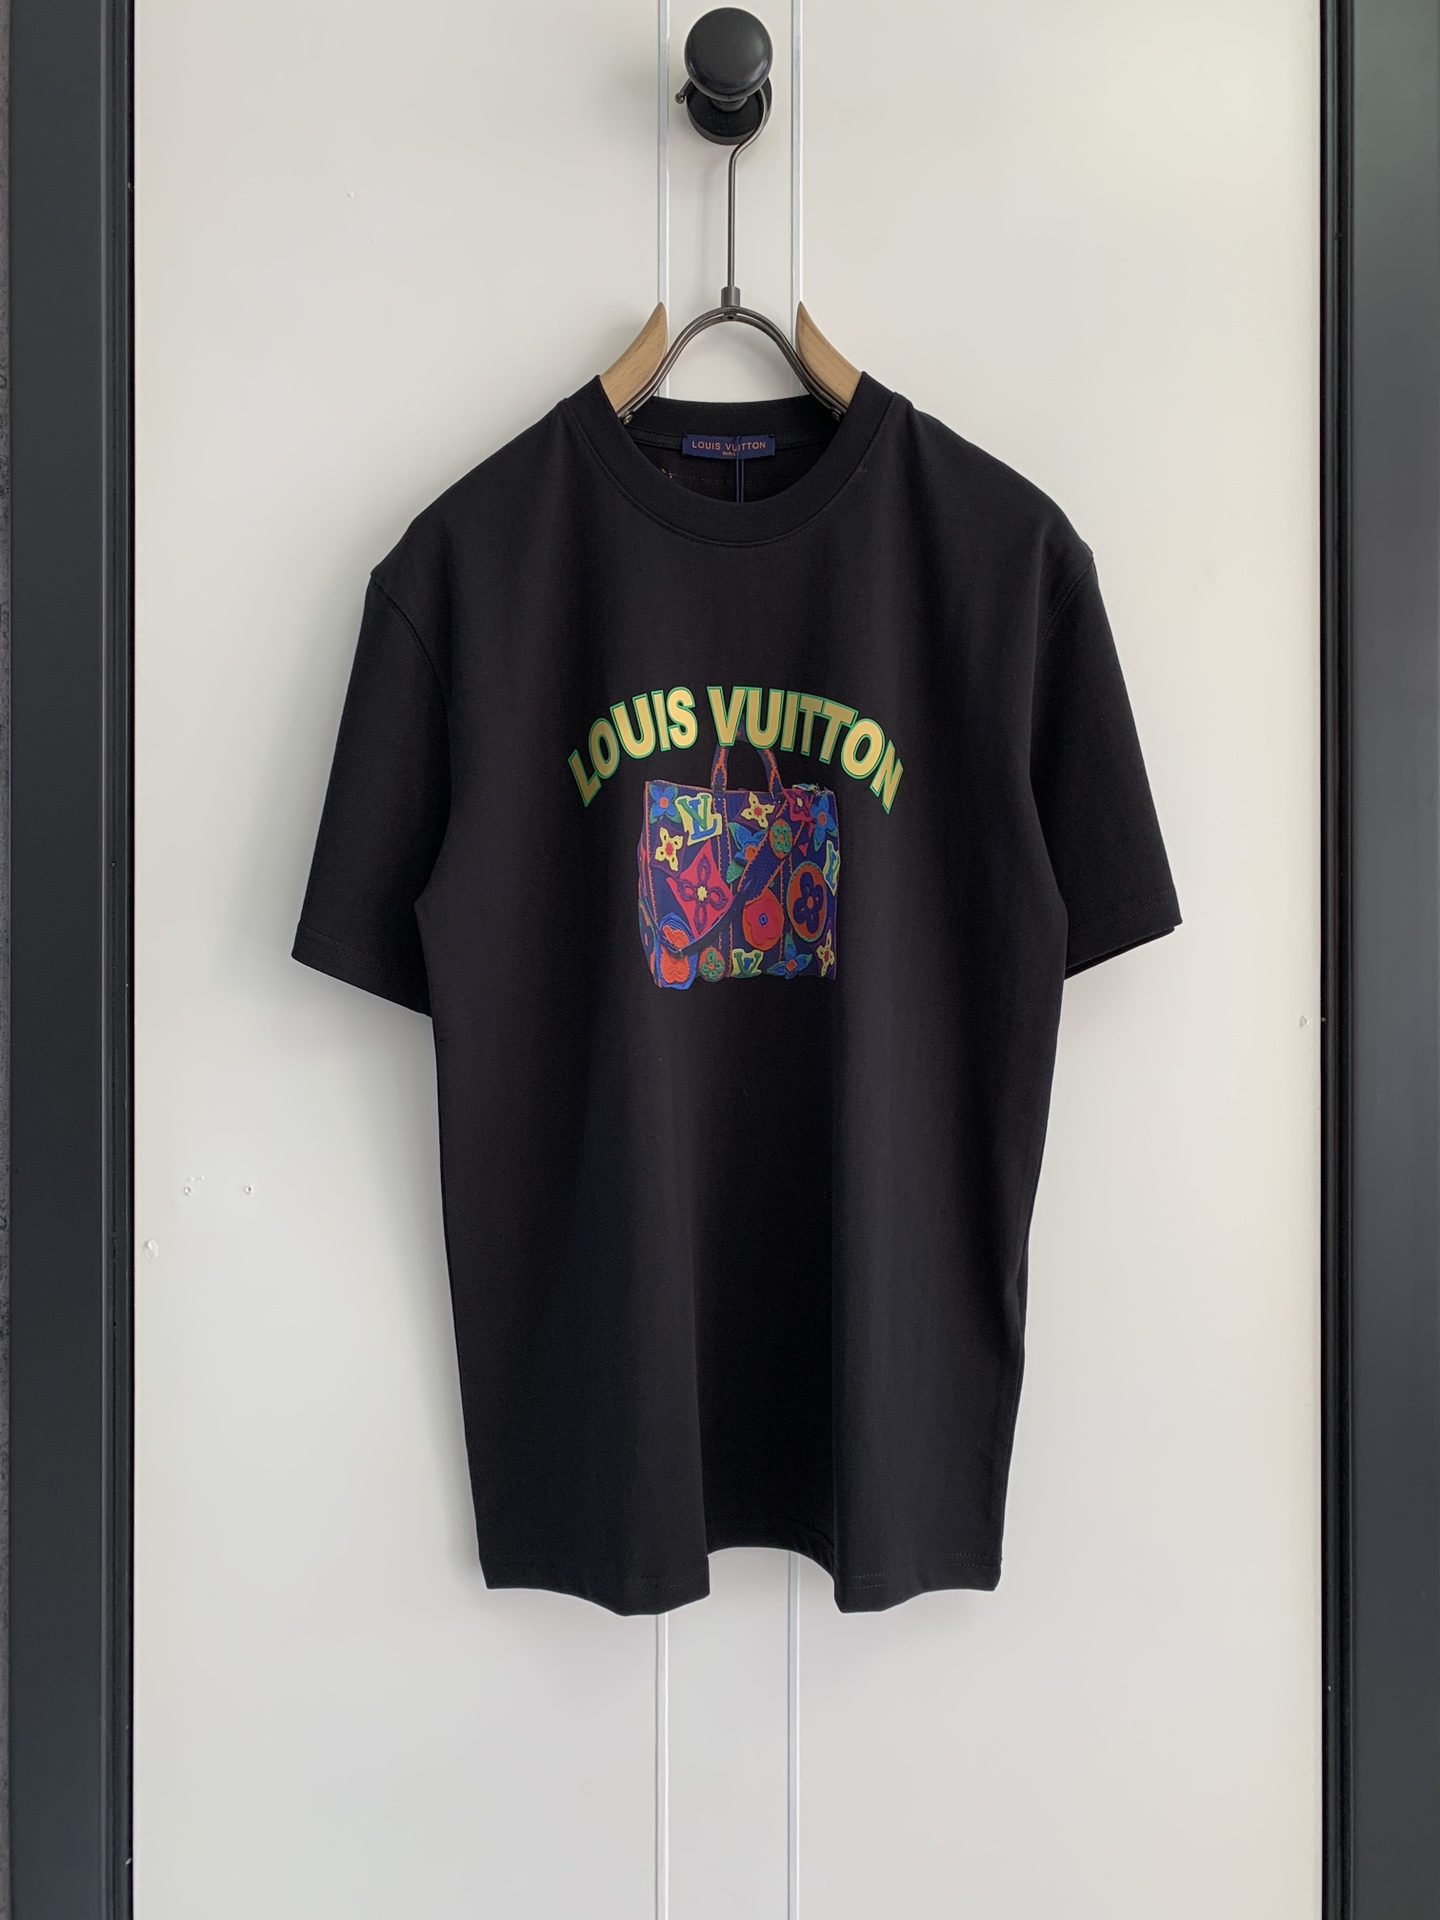 Louis Vuitton Clothing T-Shirt Black White Printing Cotton Fashion Short Sleeve